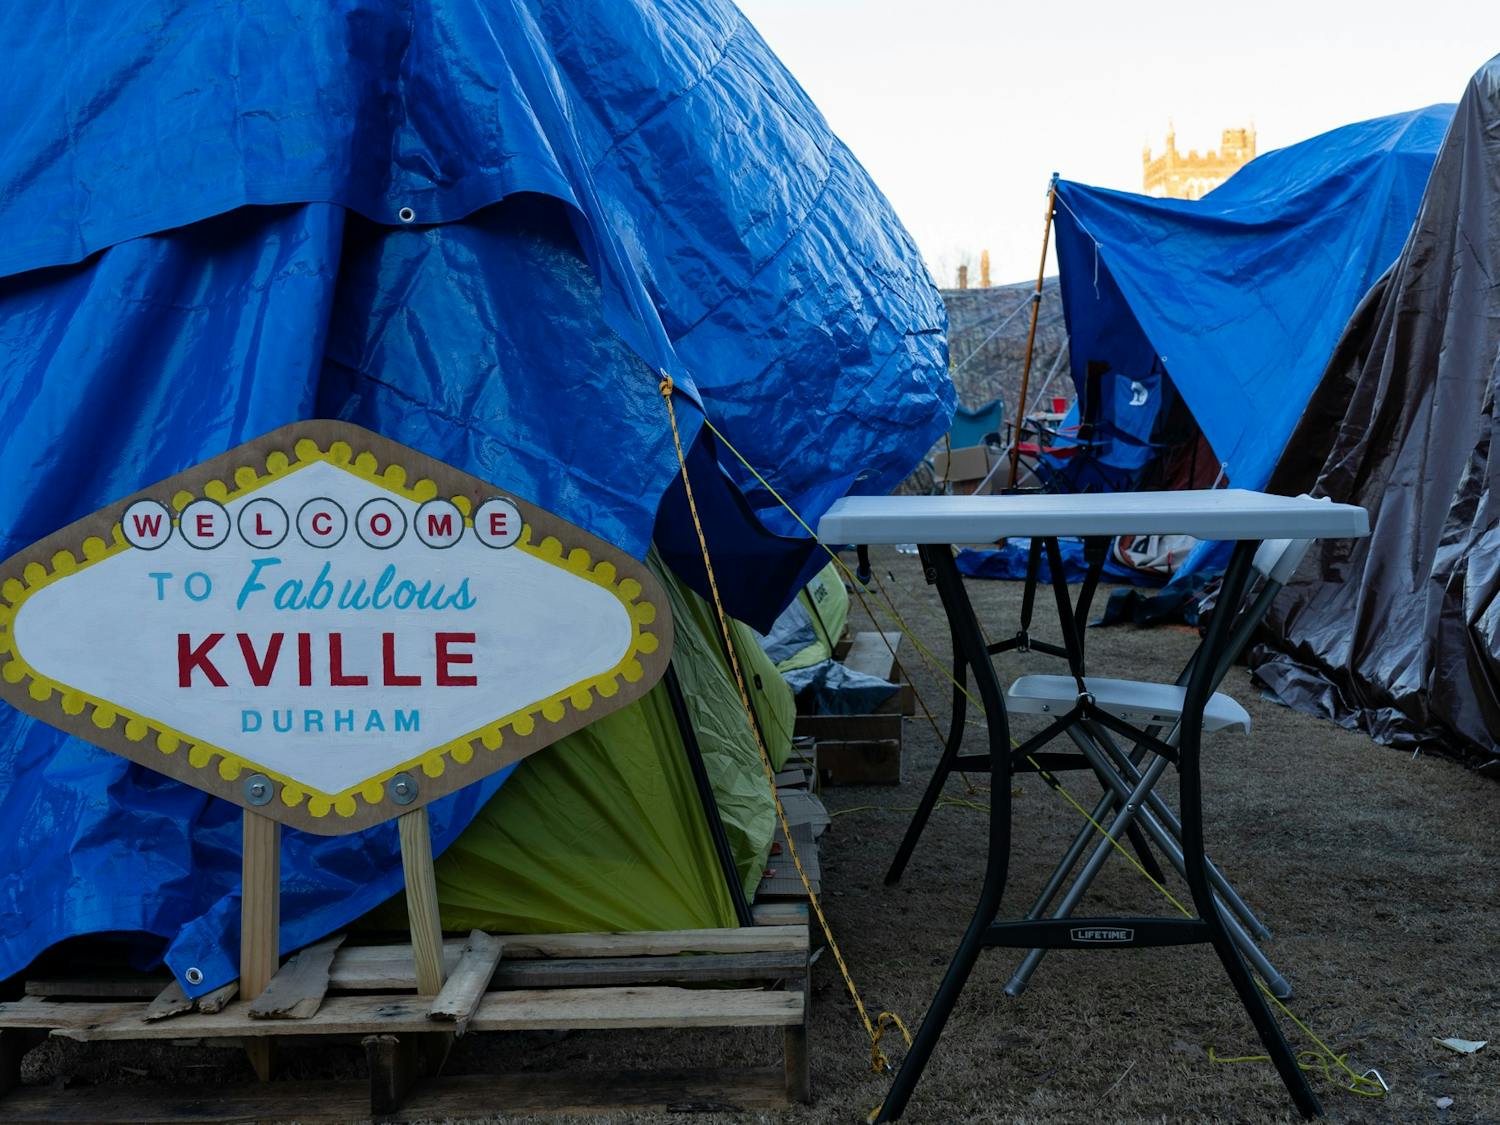 Duke's "Kville" outside of Cameron Stadium, photographed on Friday, Jan. 27, 2022.